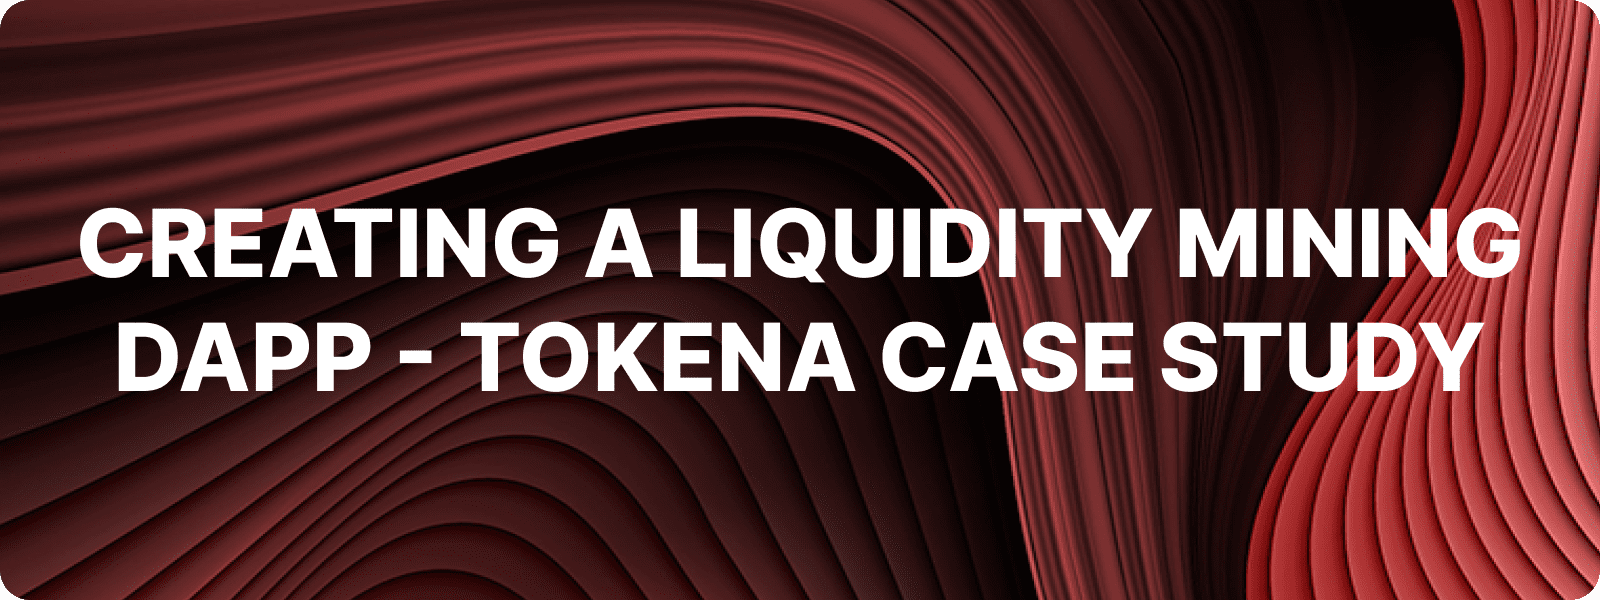 Creating a Liquidity Mining DApp - Tokena Case Study